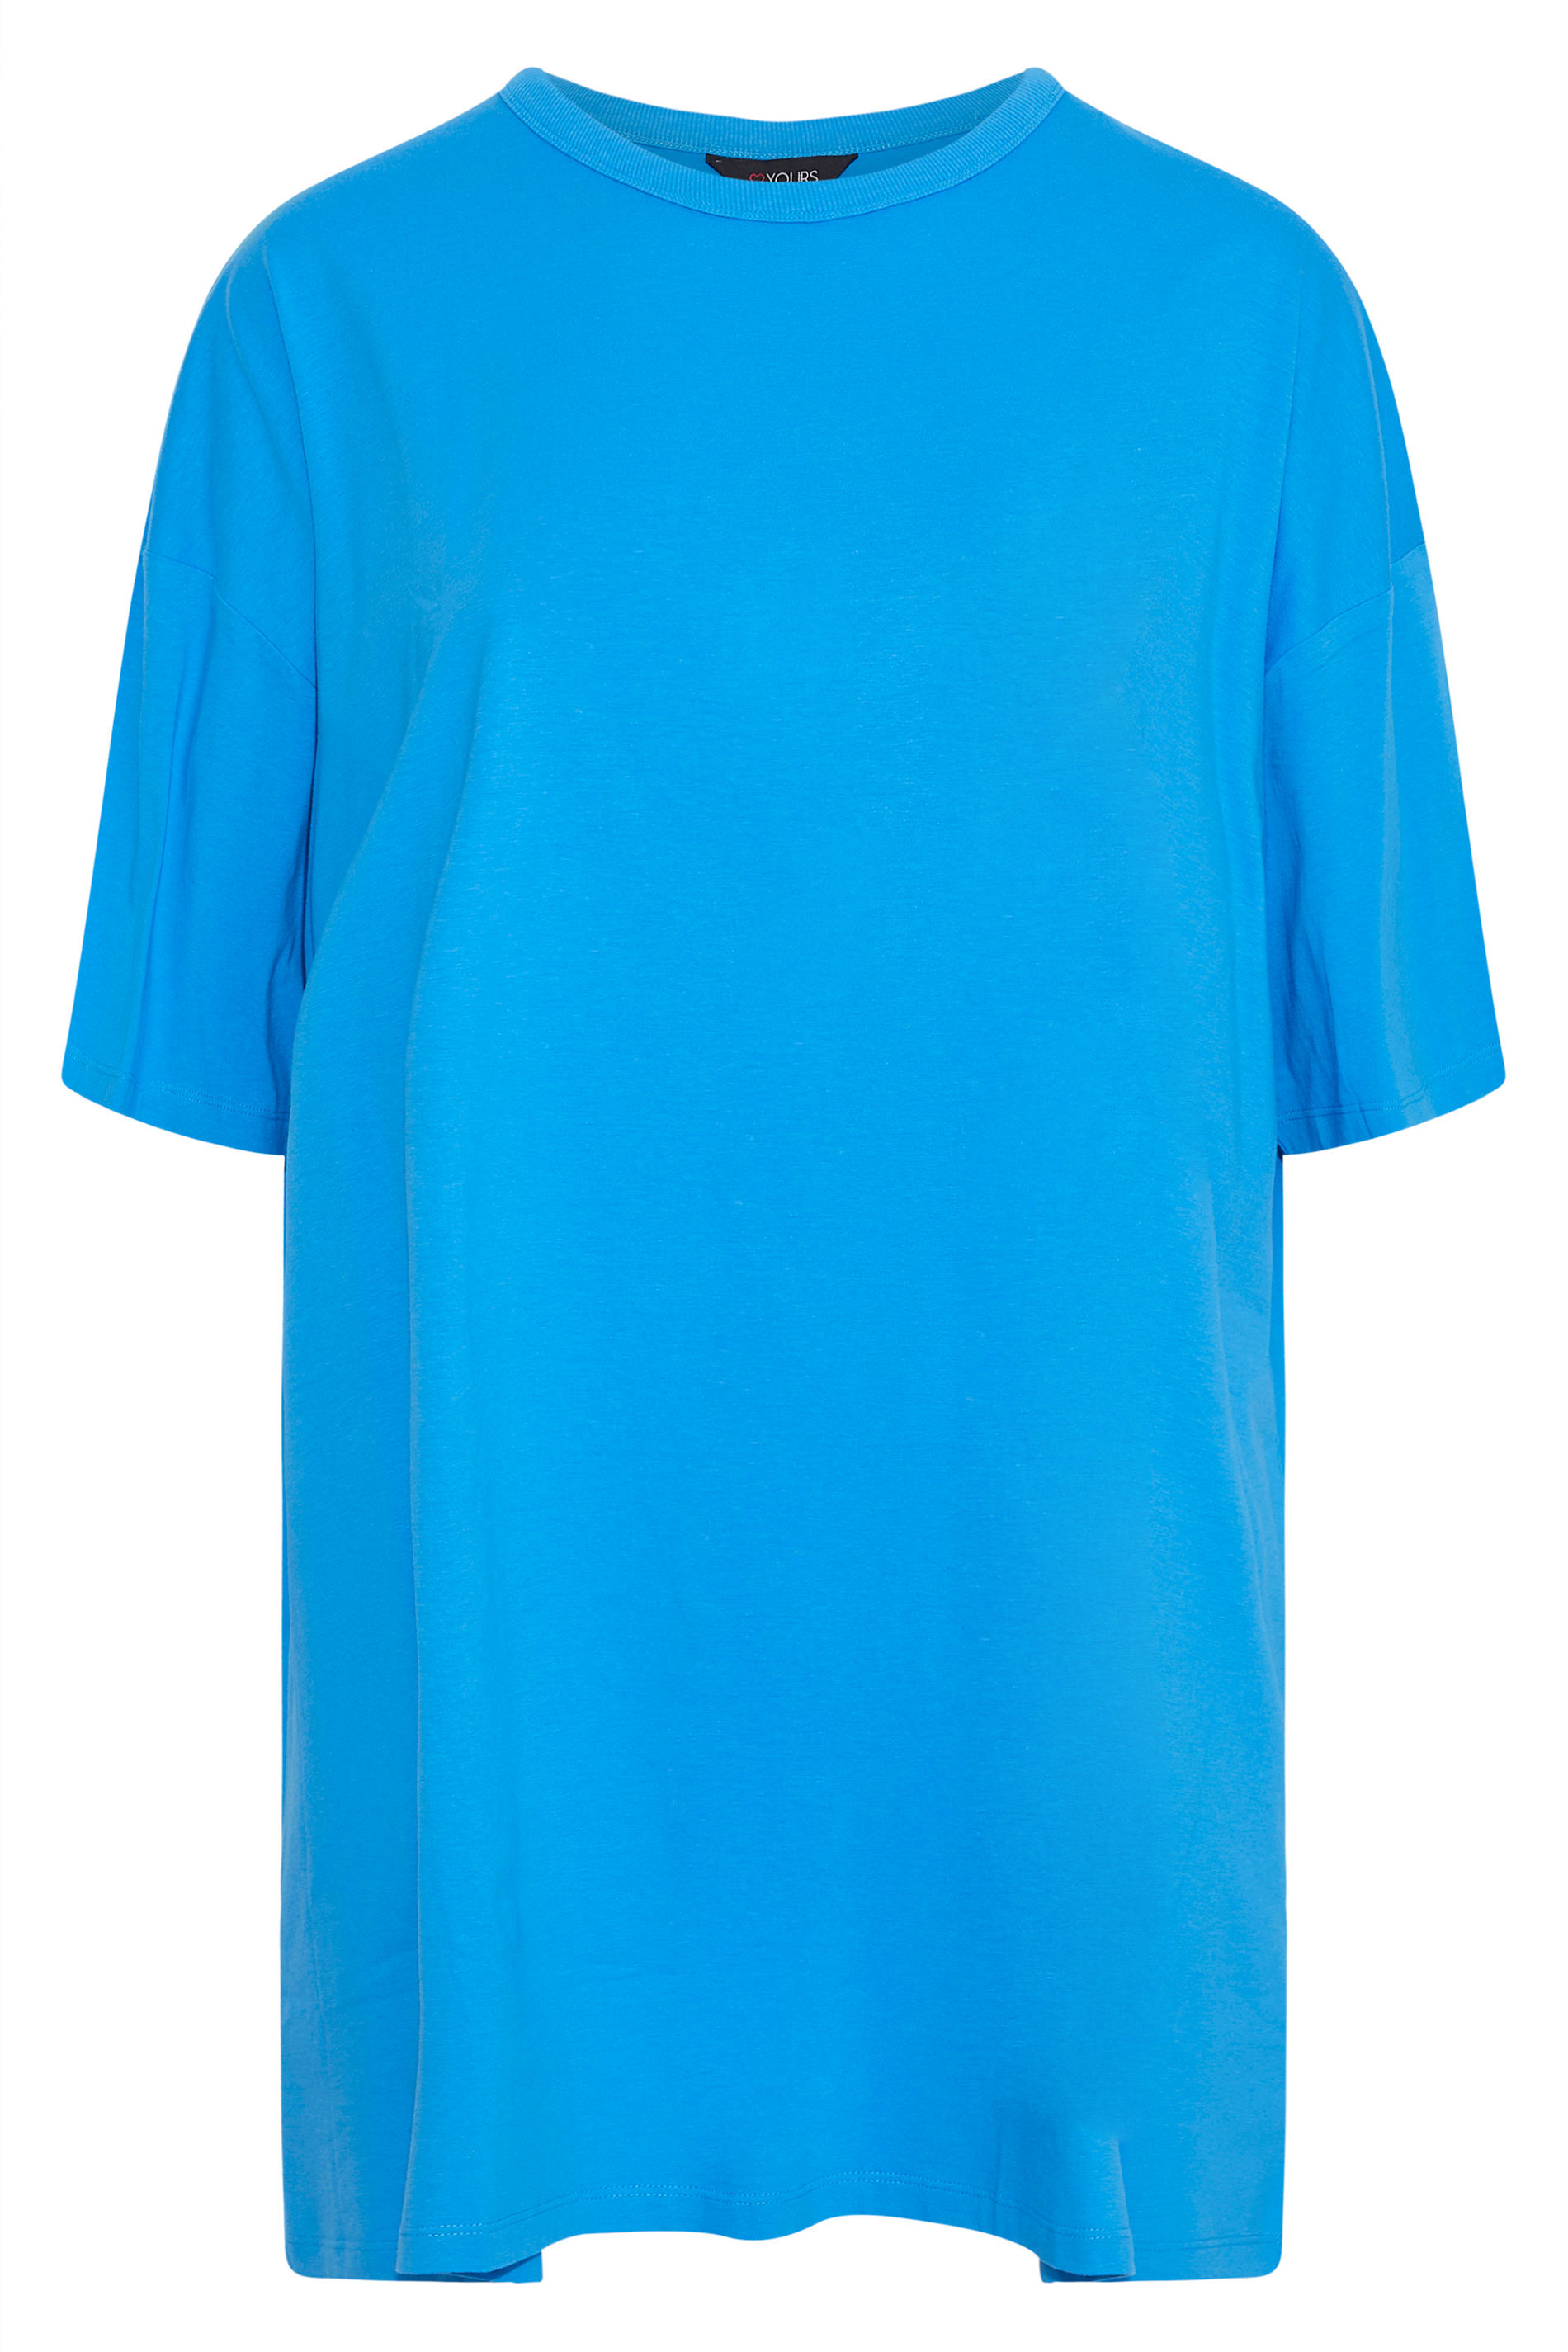 Grande taille  Tops Grande taille  T-Shirts | T-Shirt Bleu en Jersey Design Oversize - YZ56049